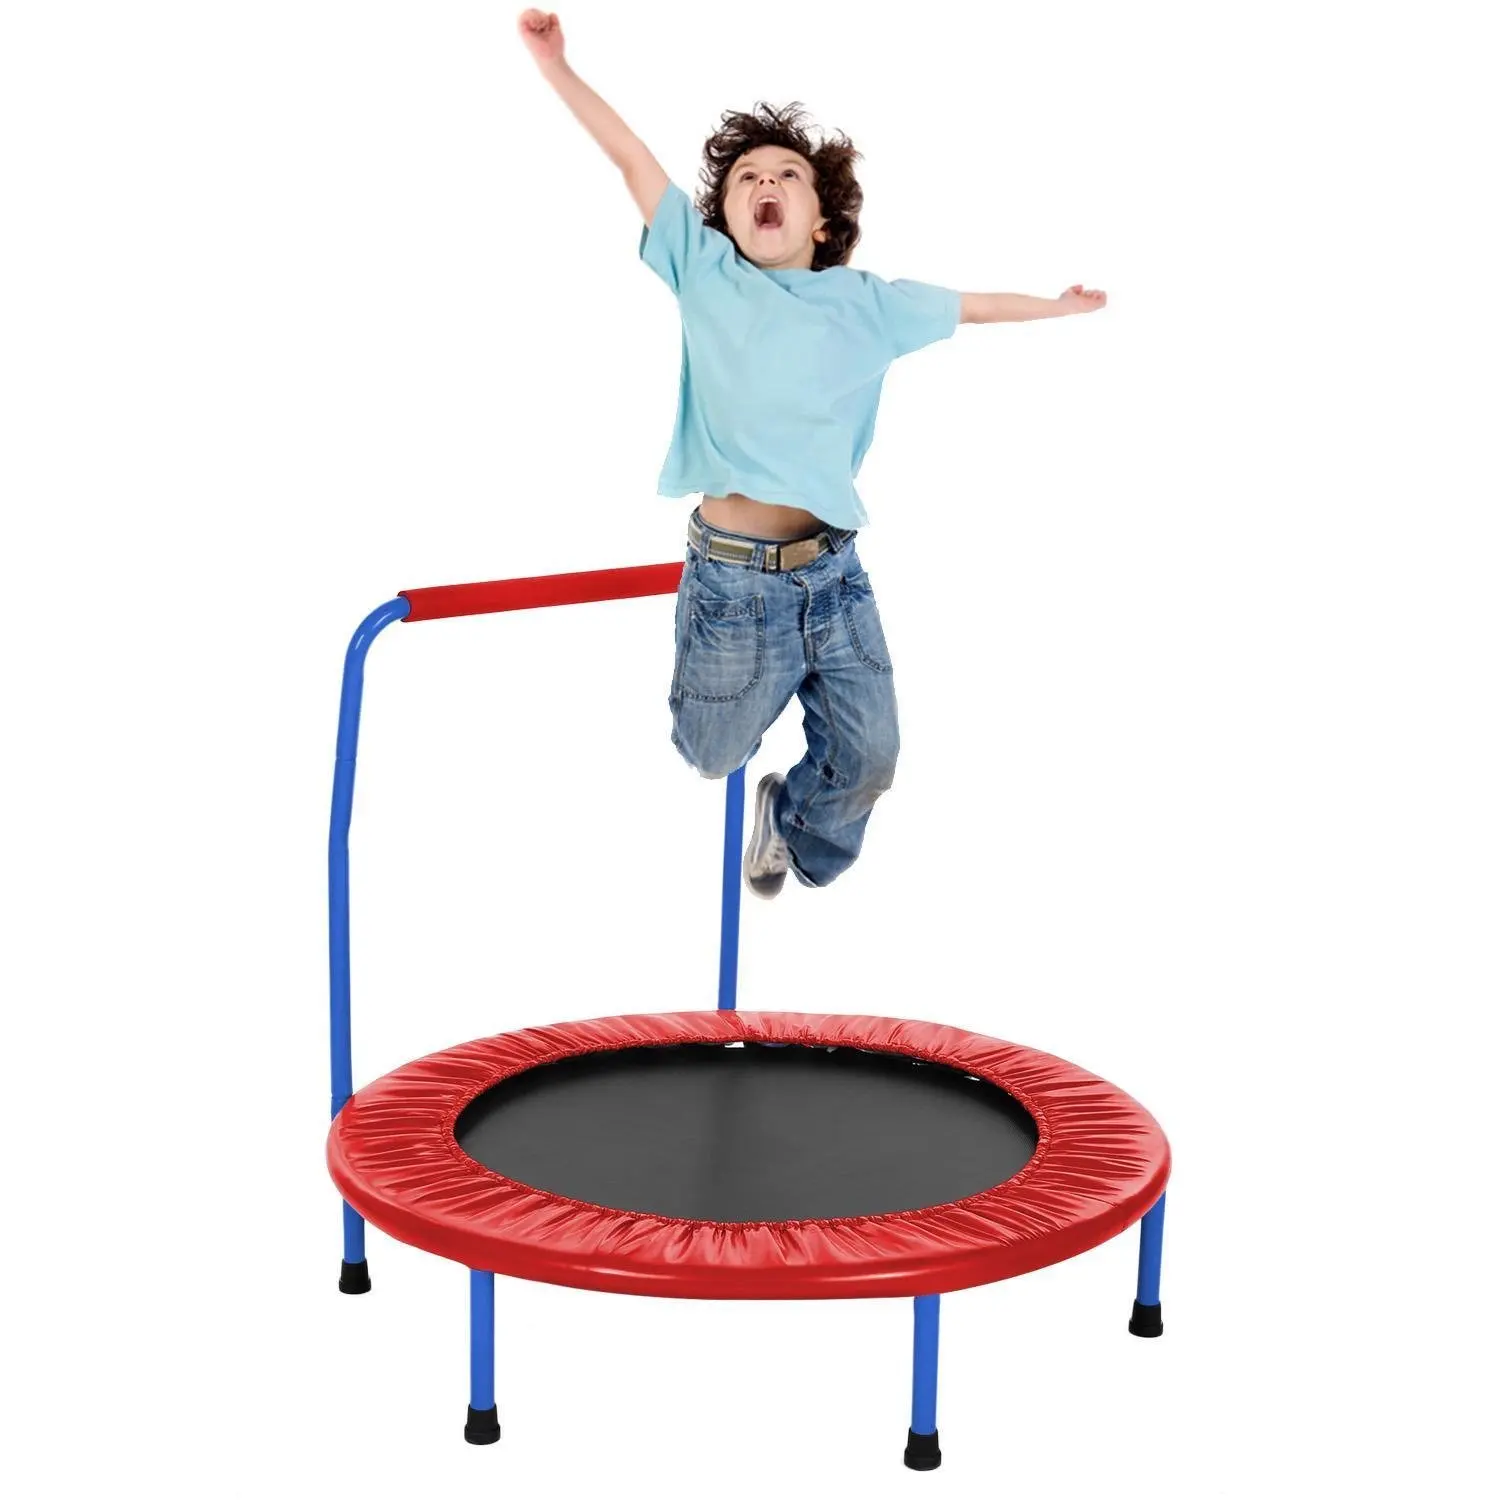 Bouncing trampoline photos